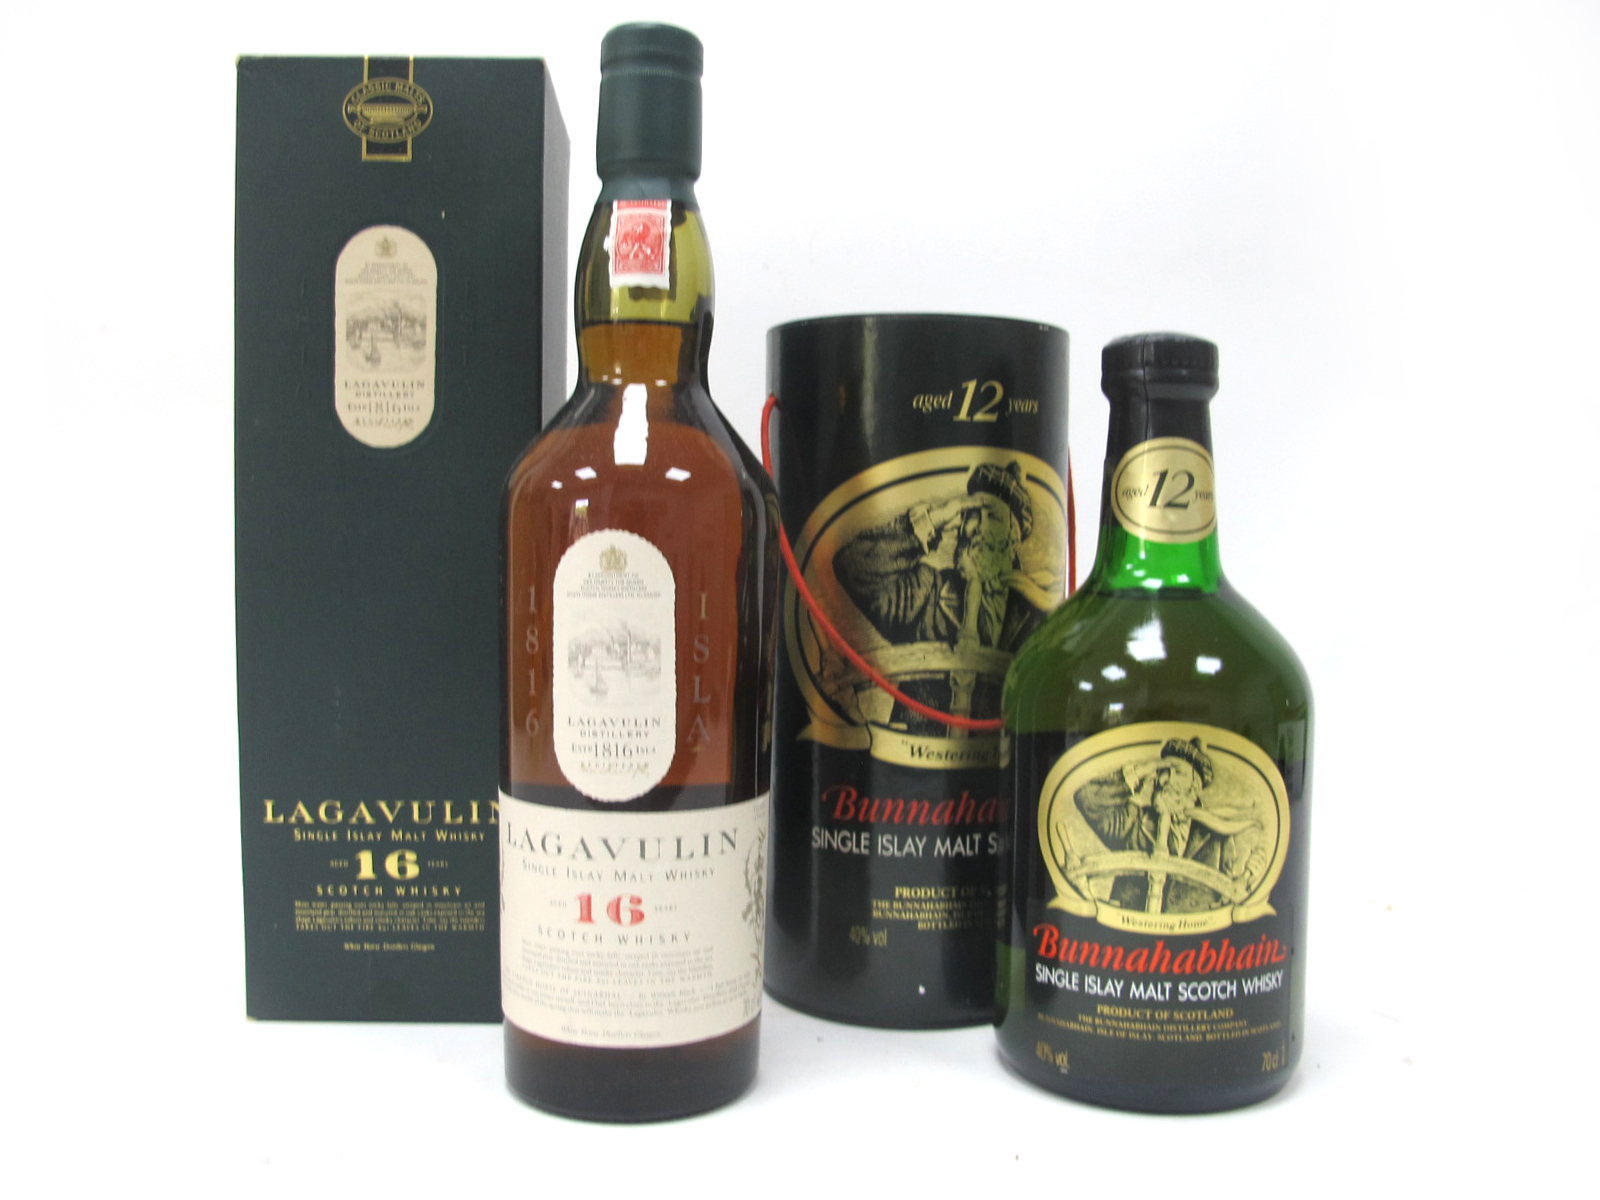 Whisky - Lagavulin Single Islay Malt Scotch Whisky Aged 16 Years, 70cl, 43% Vol., in carton;